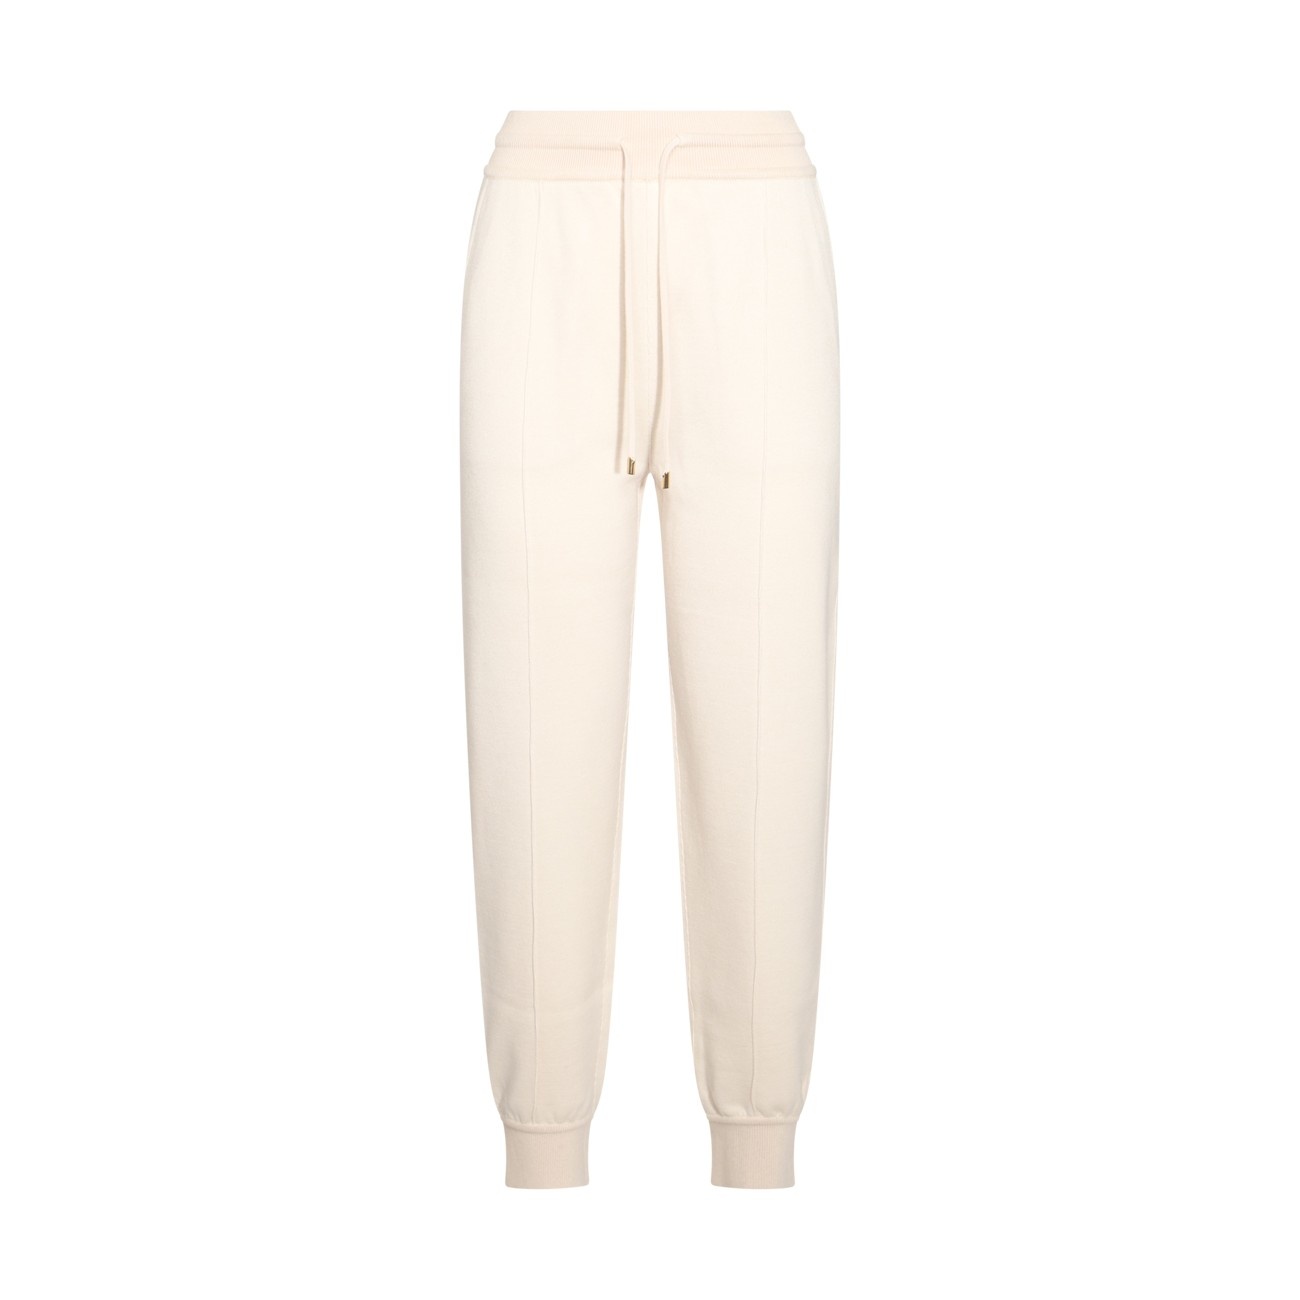 white wool pants - 1